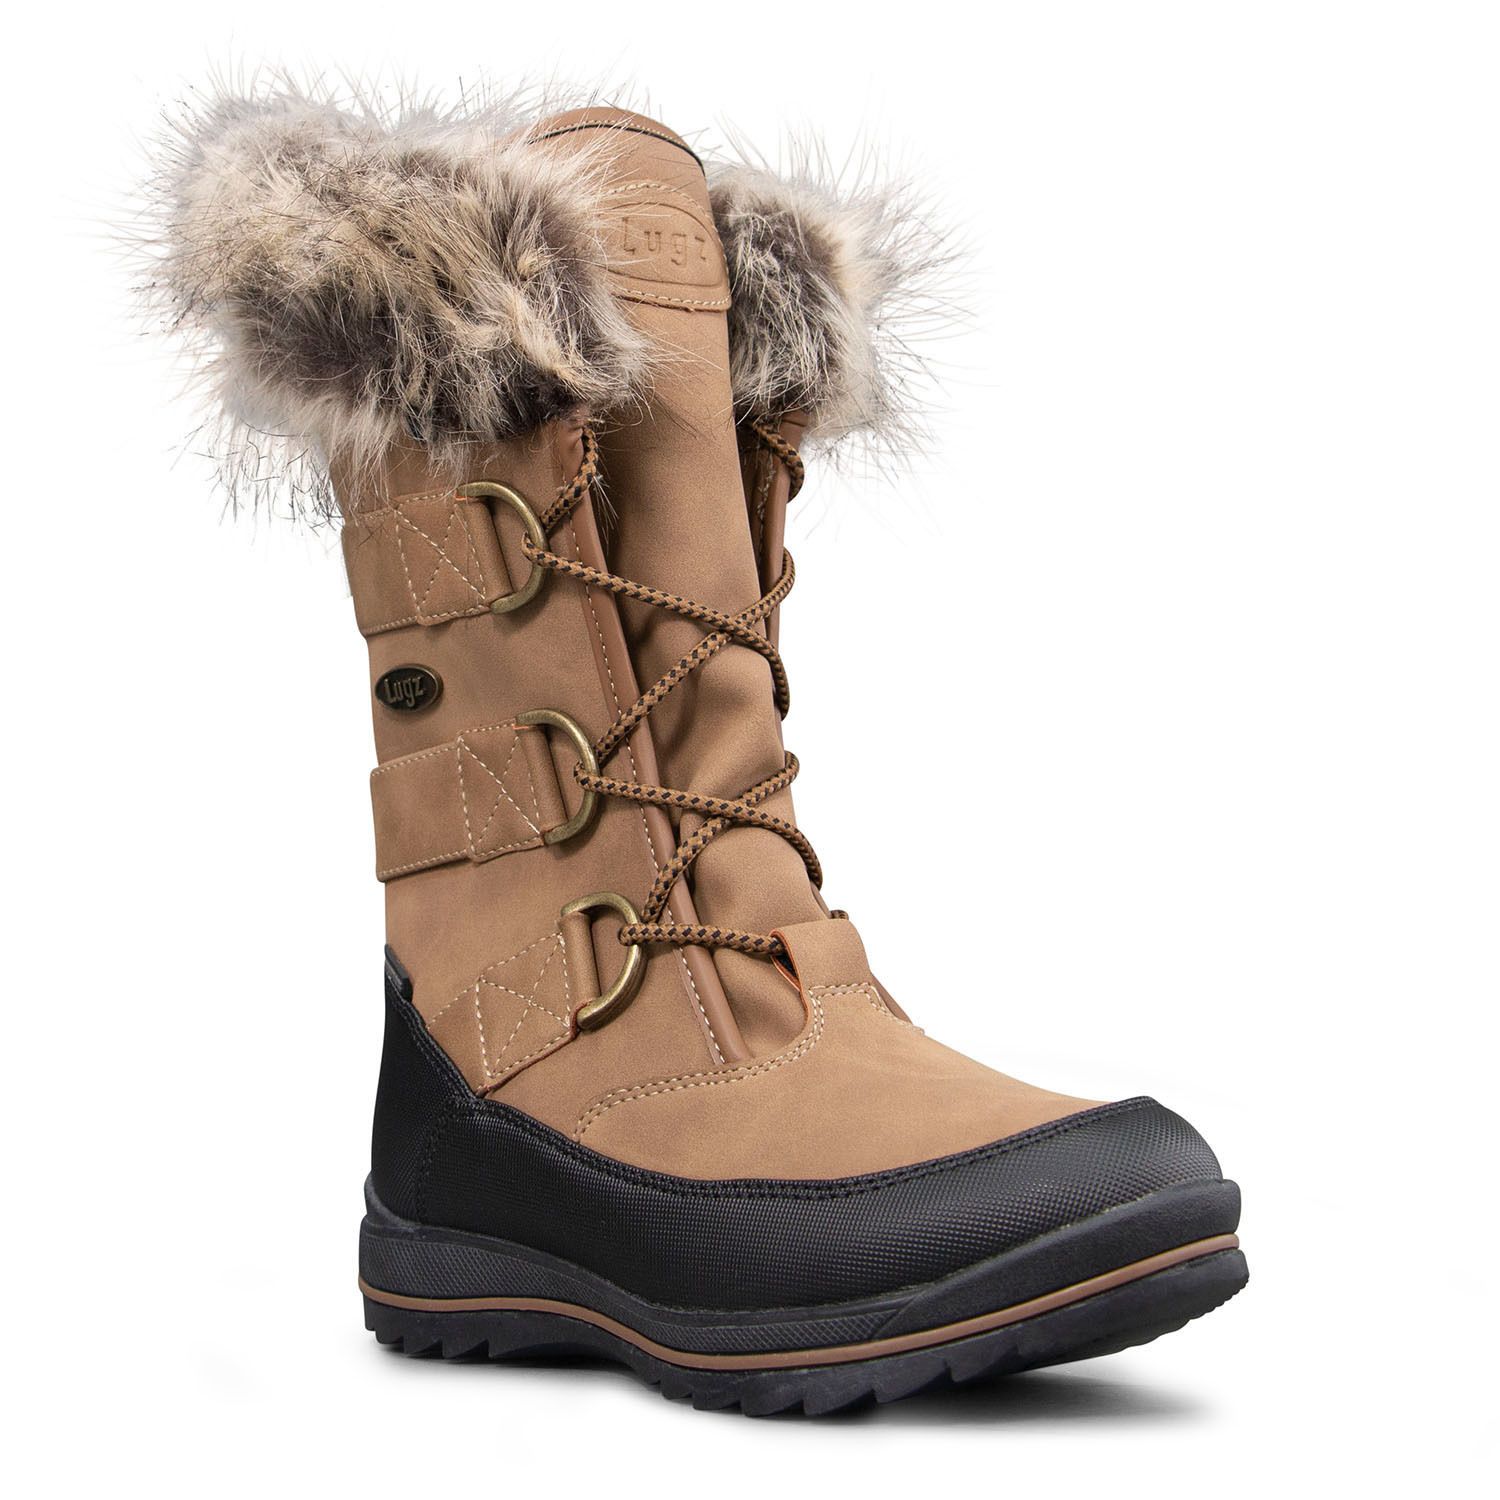 lugz women's winter boots